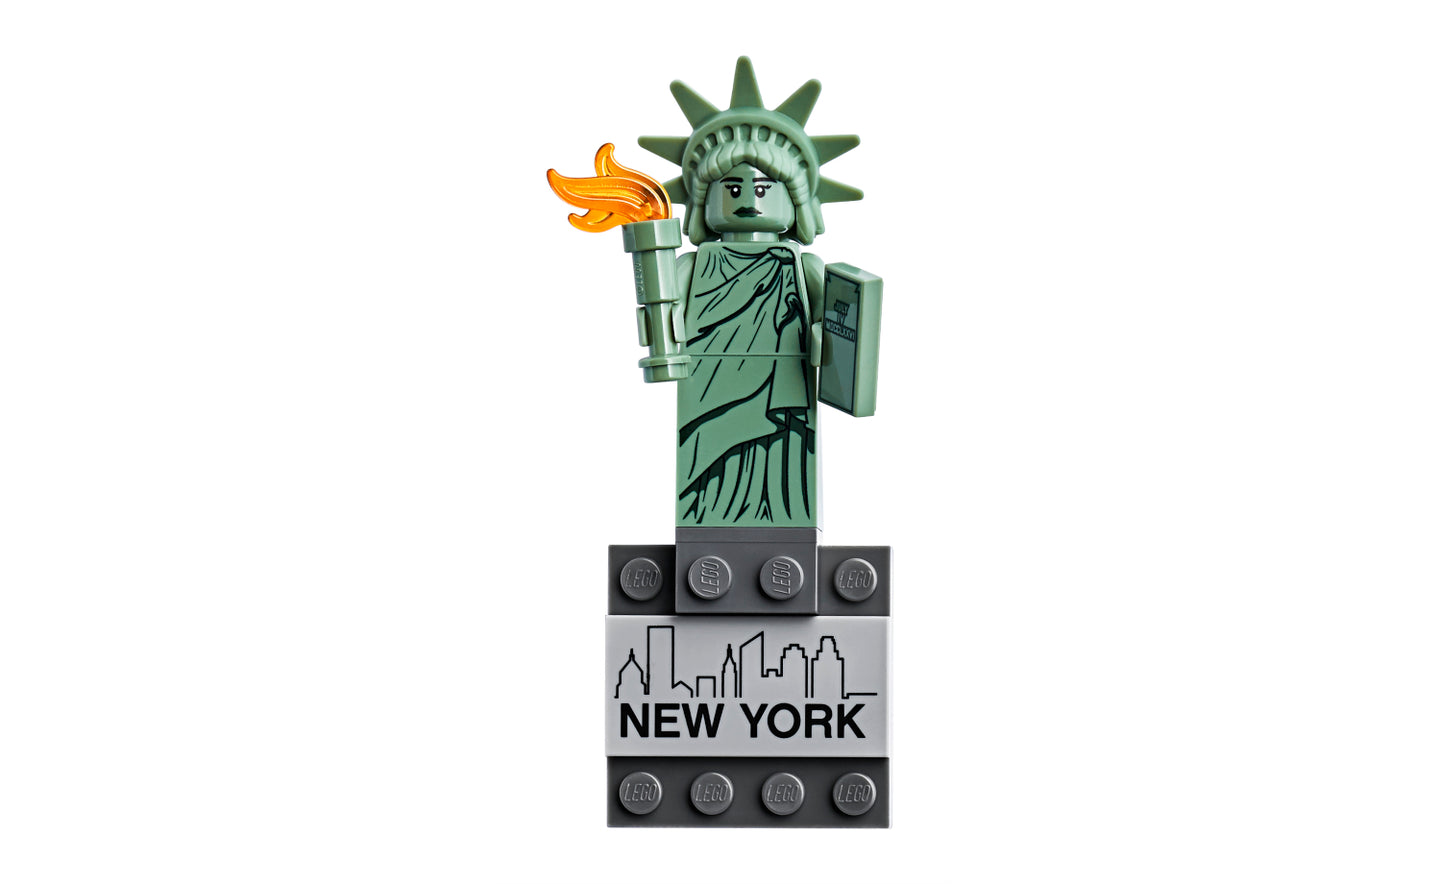 Statue Of Liberty Architecture set : r/lego